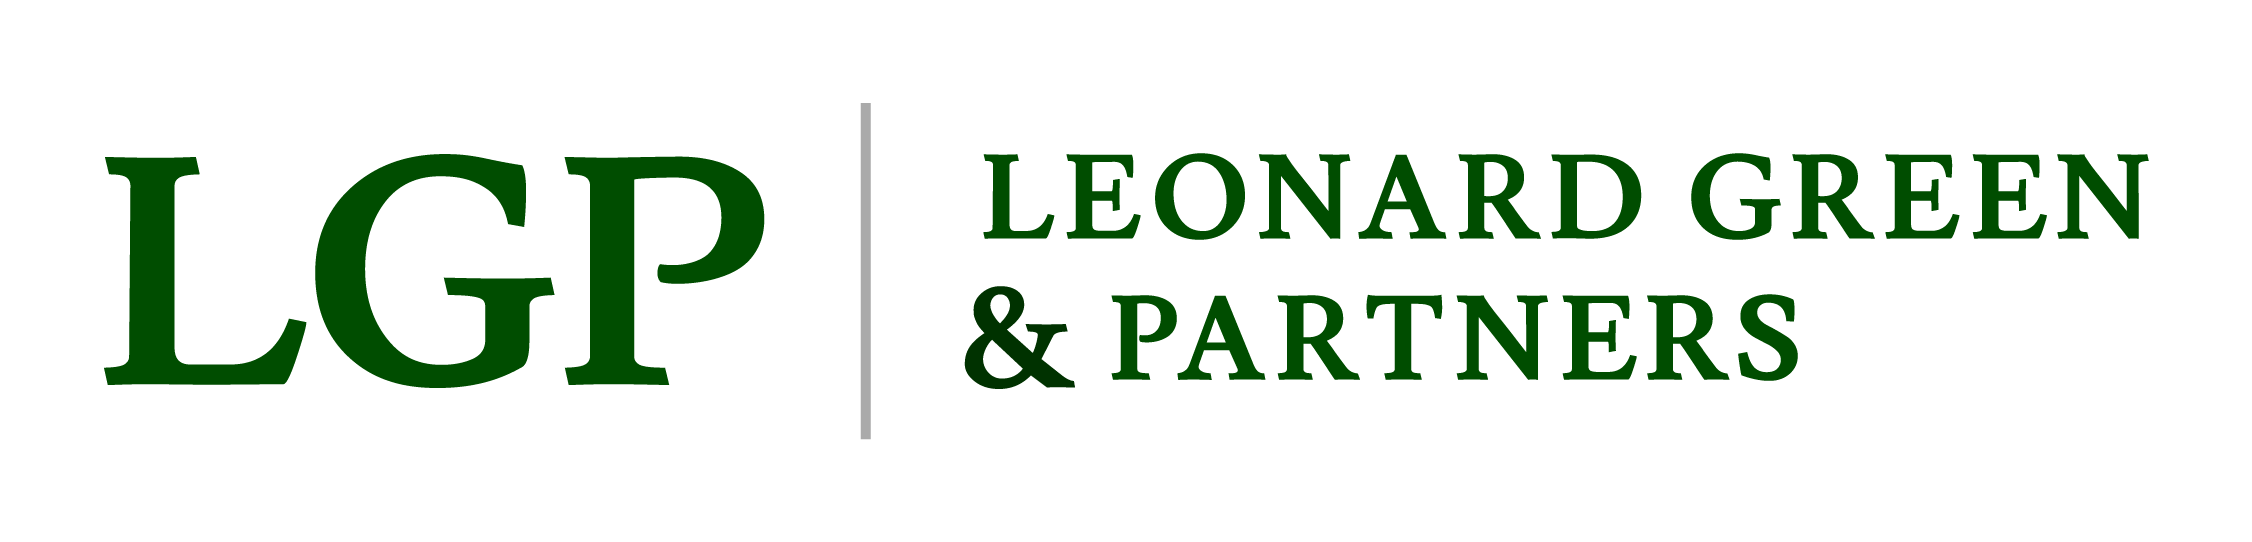 Leonard Green & Partners Logo